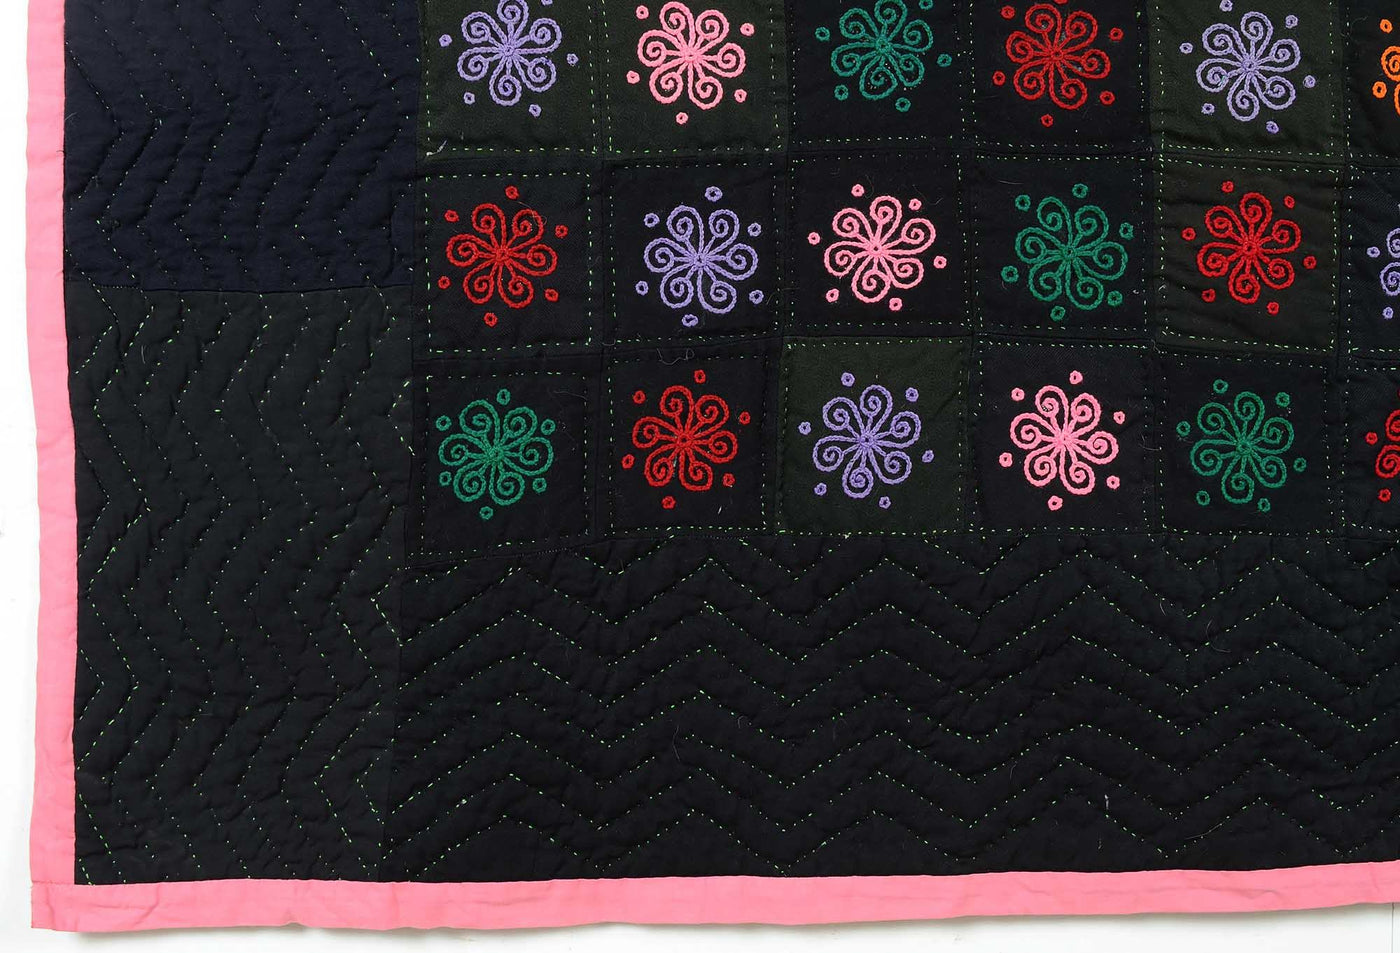 lancaster-county-amish-embroidered-quilt-1441244-bottom-left-corner-detail-3